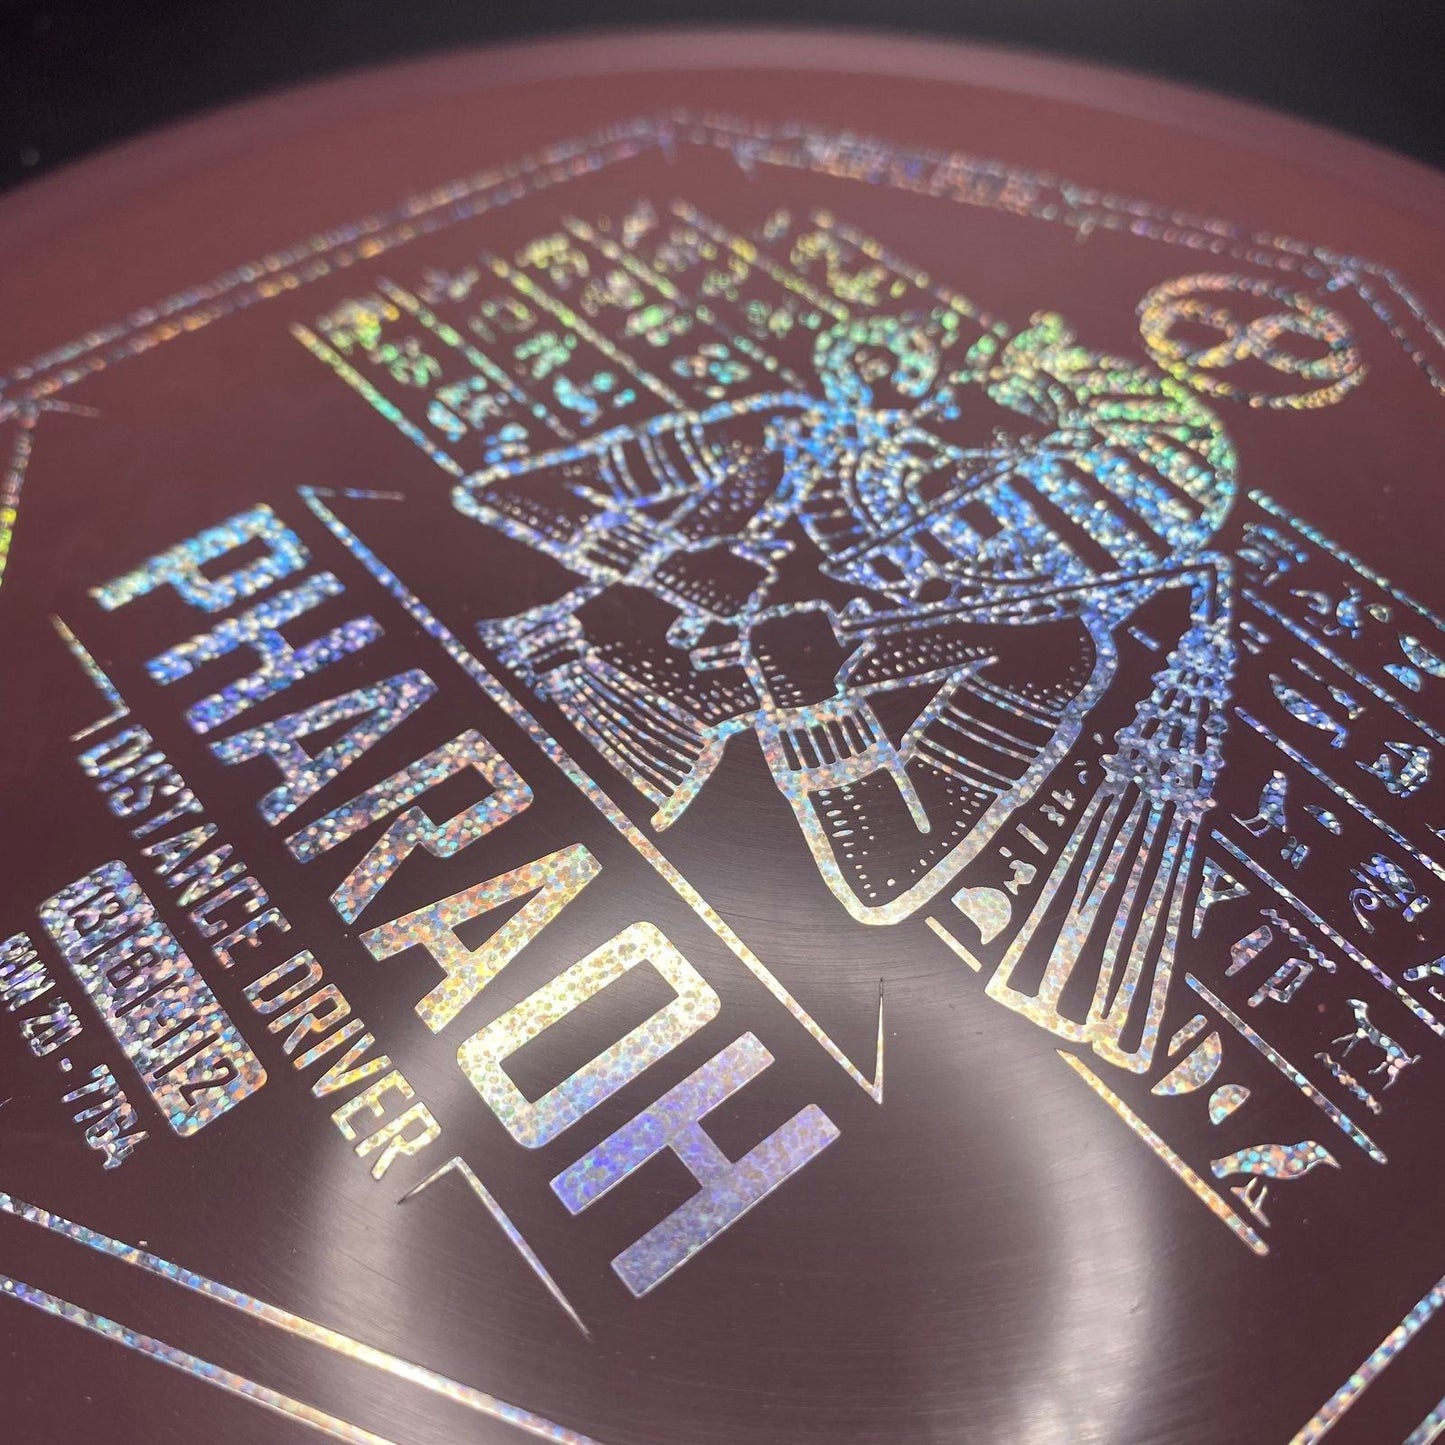 I-Blend Pharaoh Infinite Discs